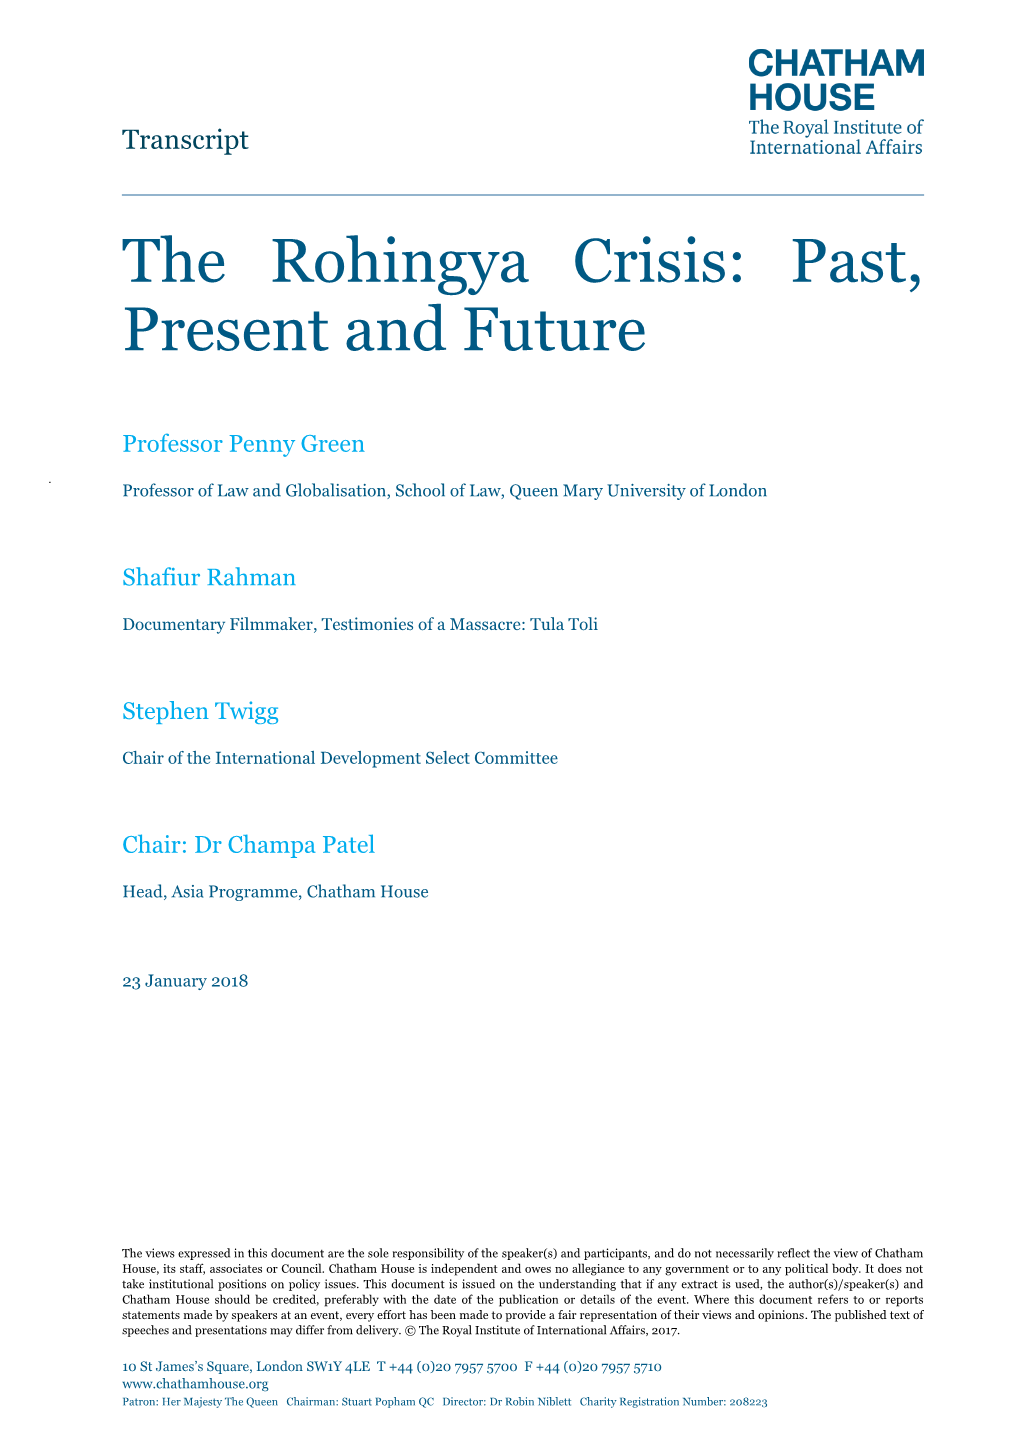 The Rohingya Crisis: Past, Present and Future